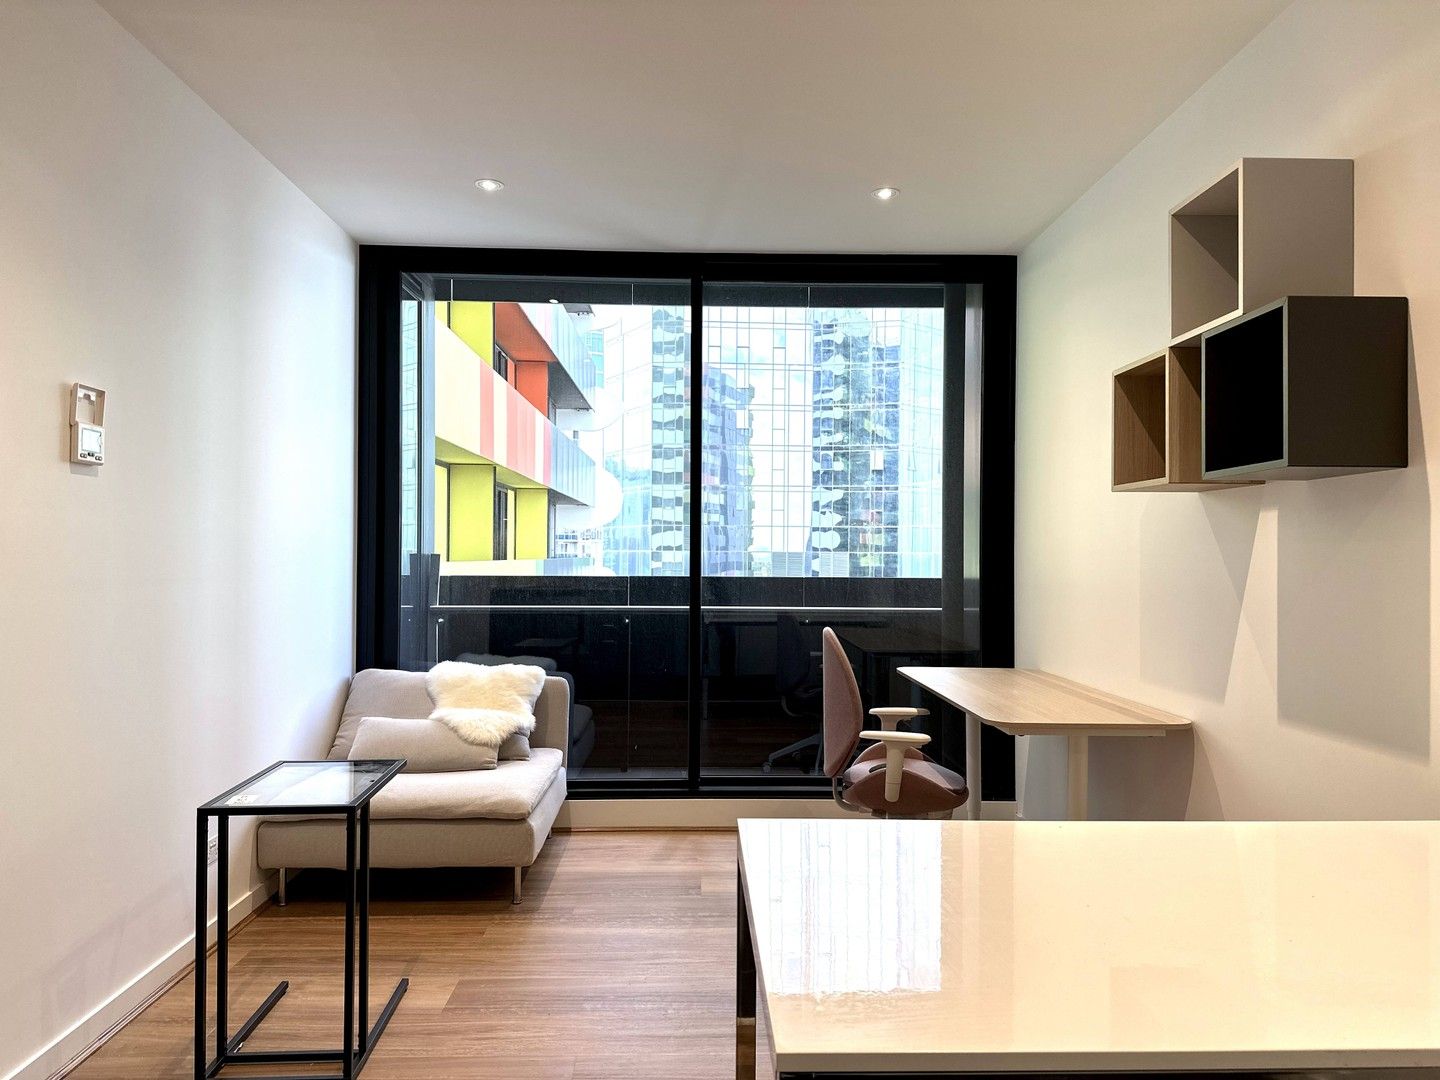 2 bedrooms Apartment / Unit / Flat in 2319/555 Swanston Street CARLTON VIC, 3053